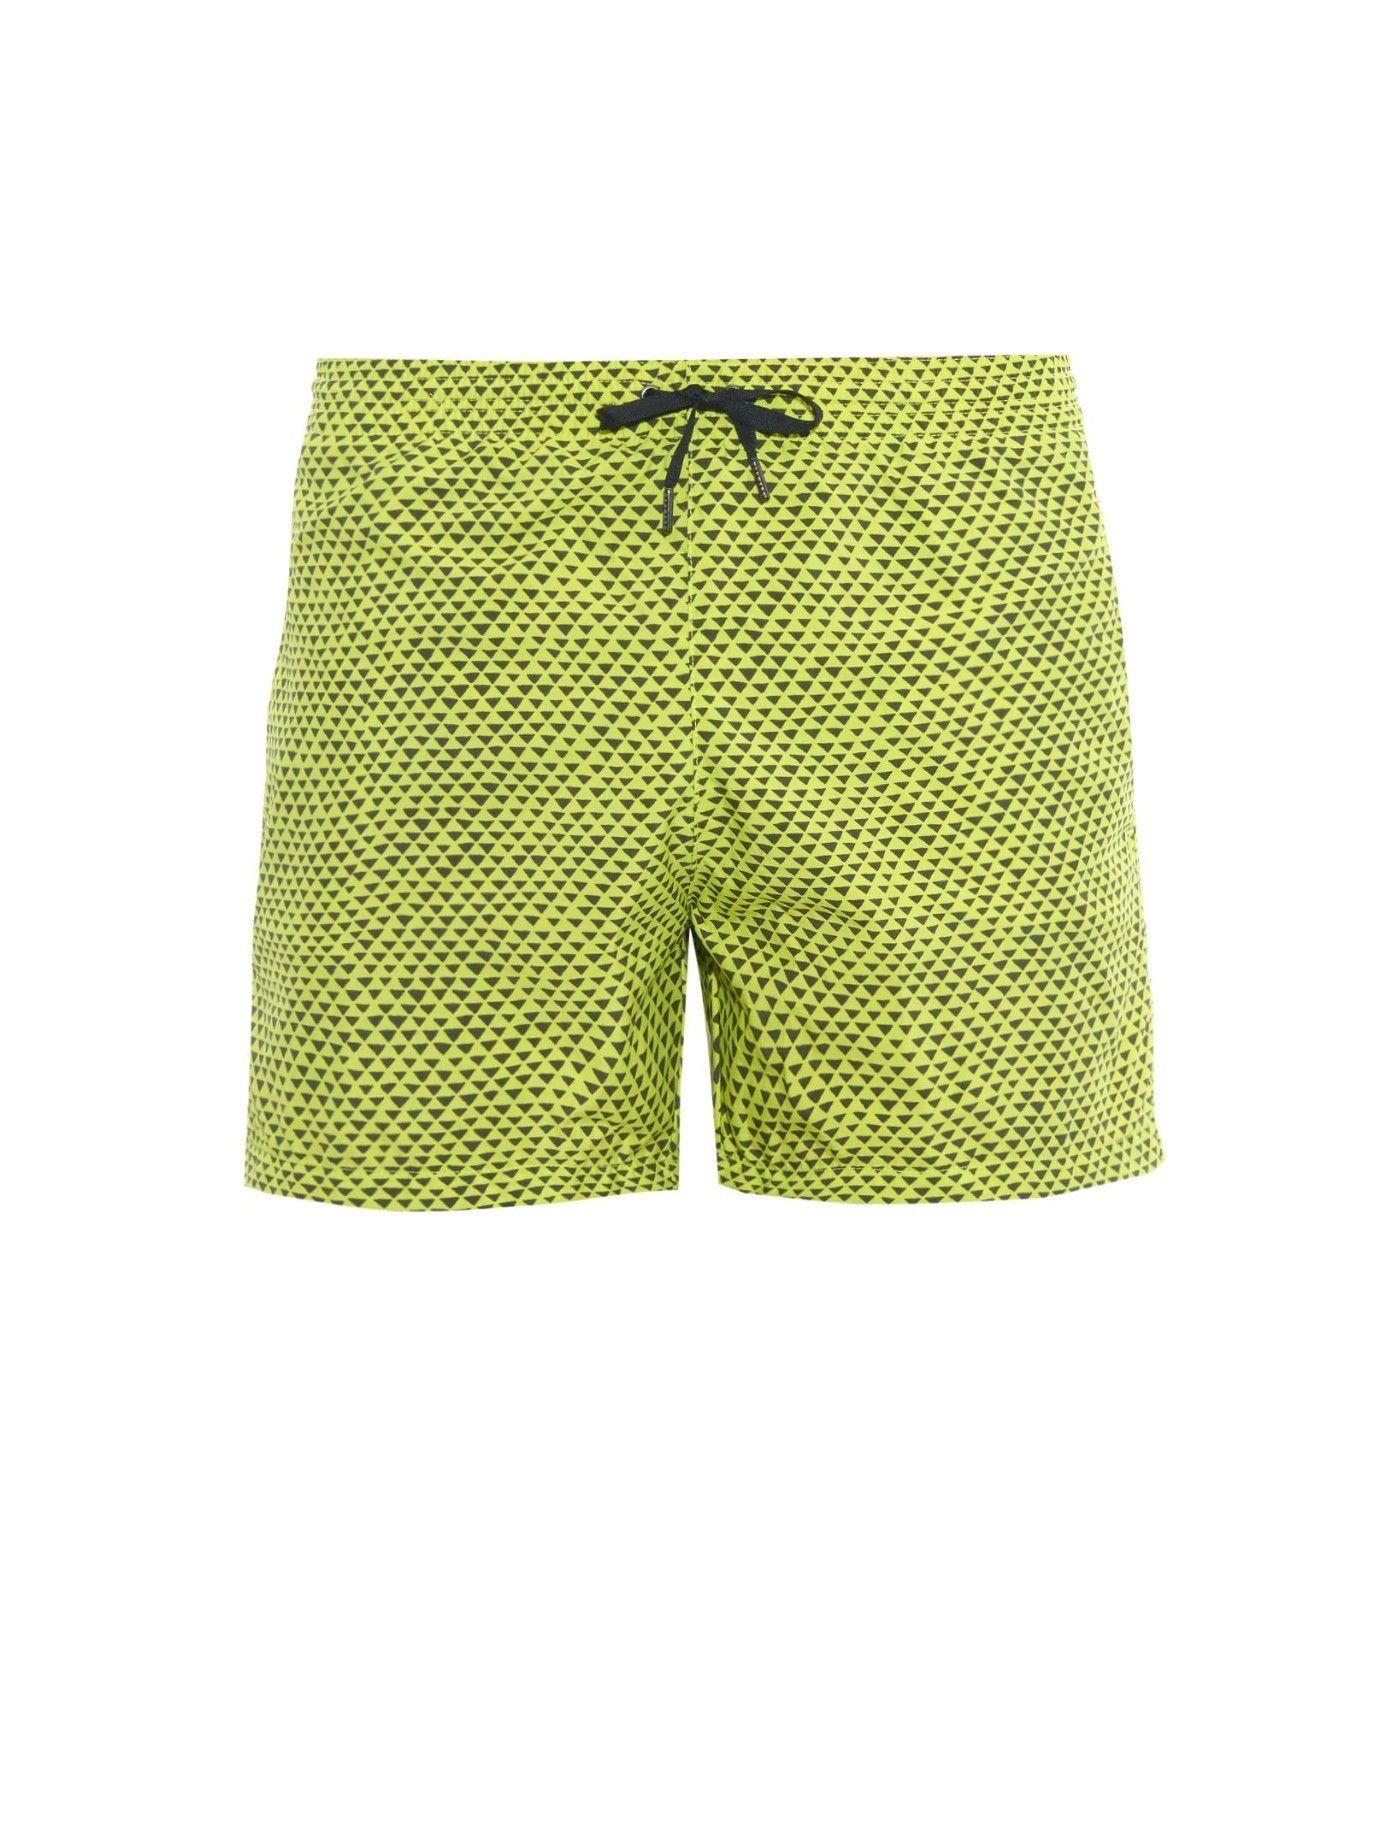 Green with Yellow Triangle Logo - Danward Triangle-print Swim Shorts in Yellow for Men - Lyst